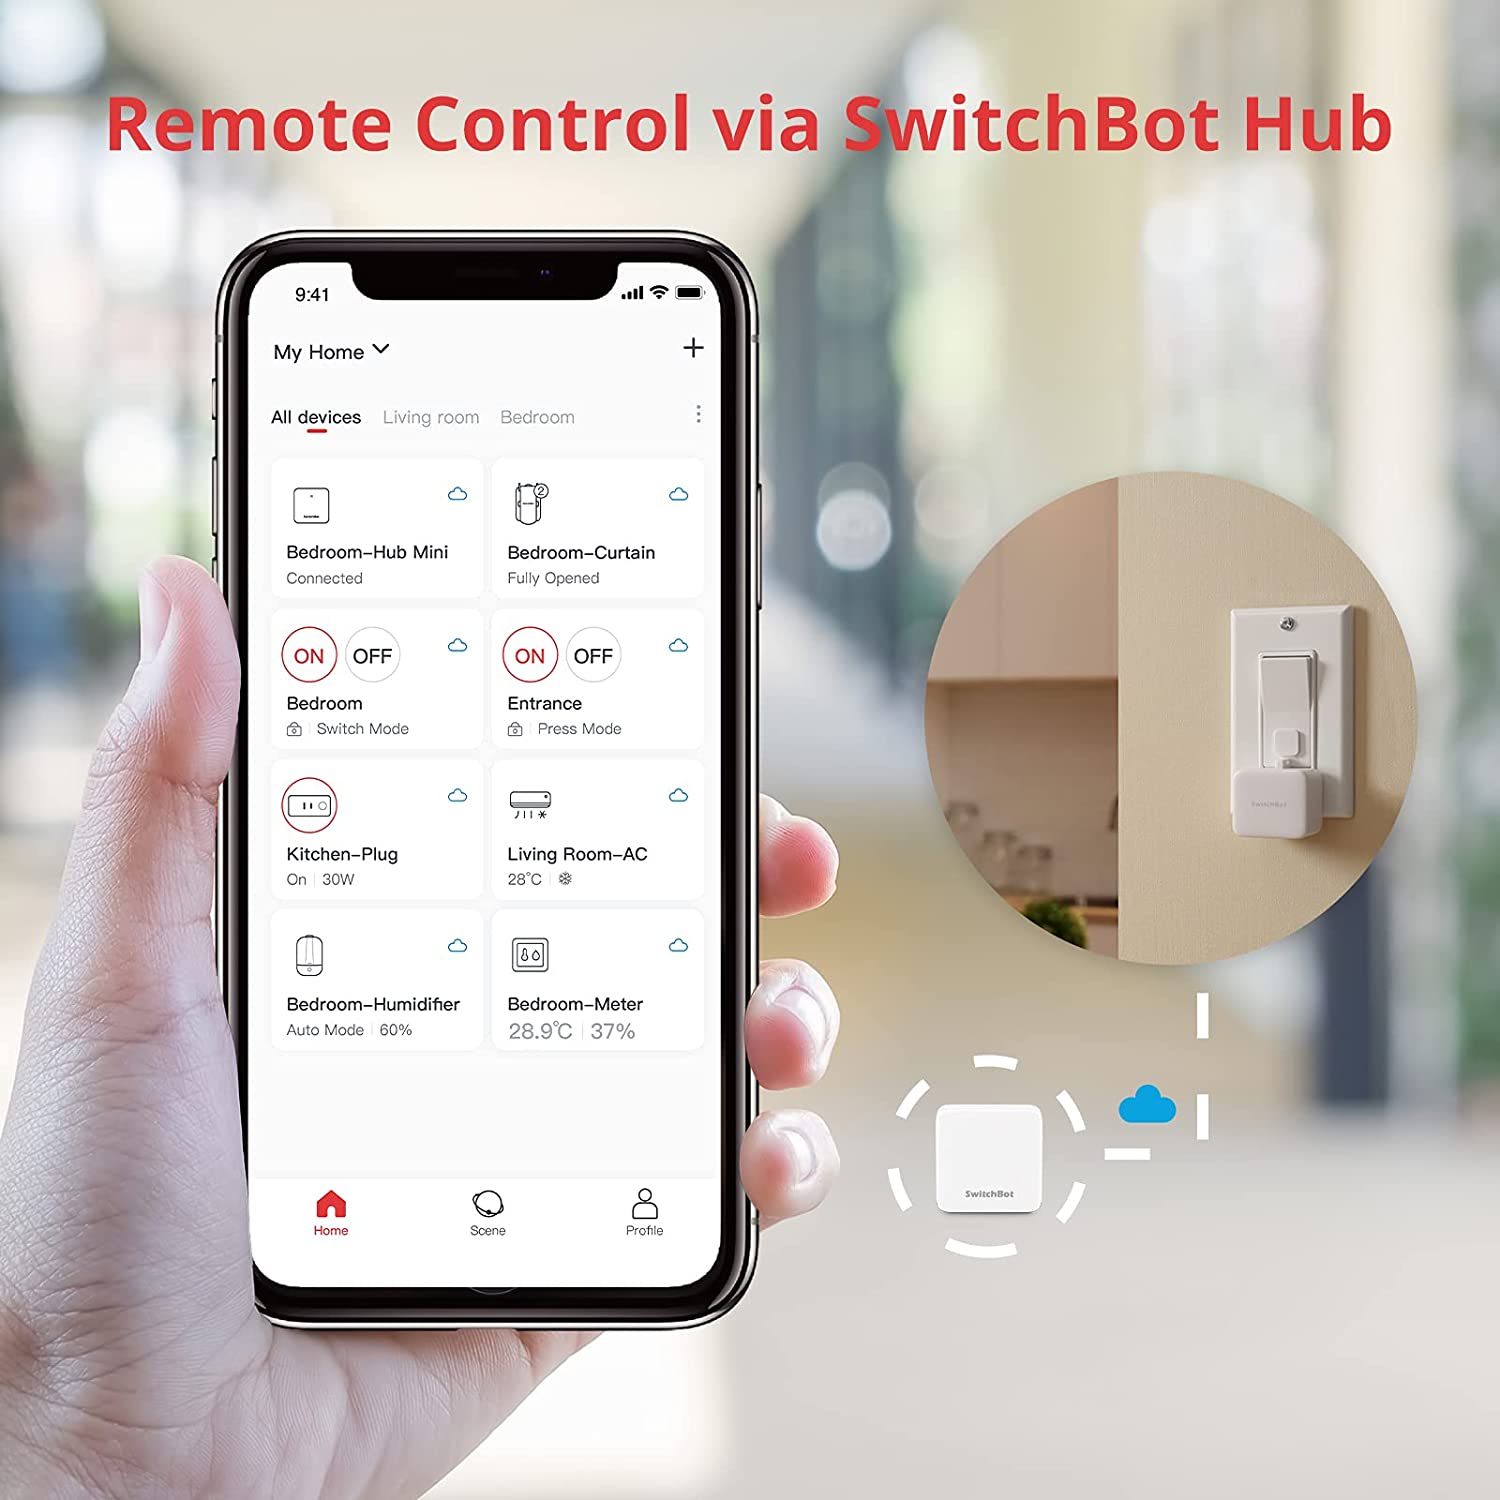 Switchbot for Flip Light Switch? : r/smarthome